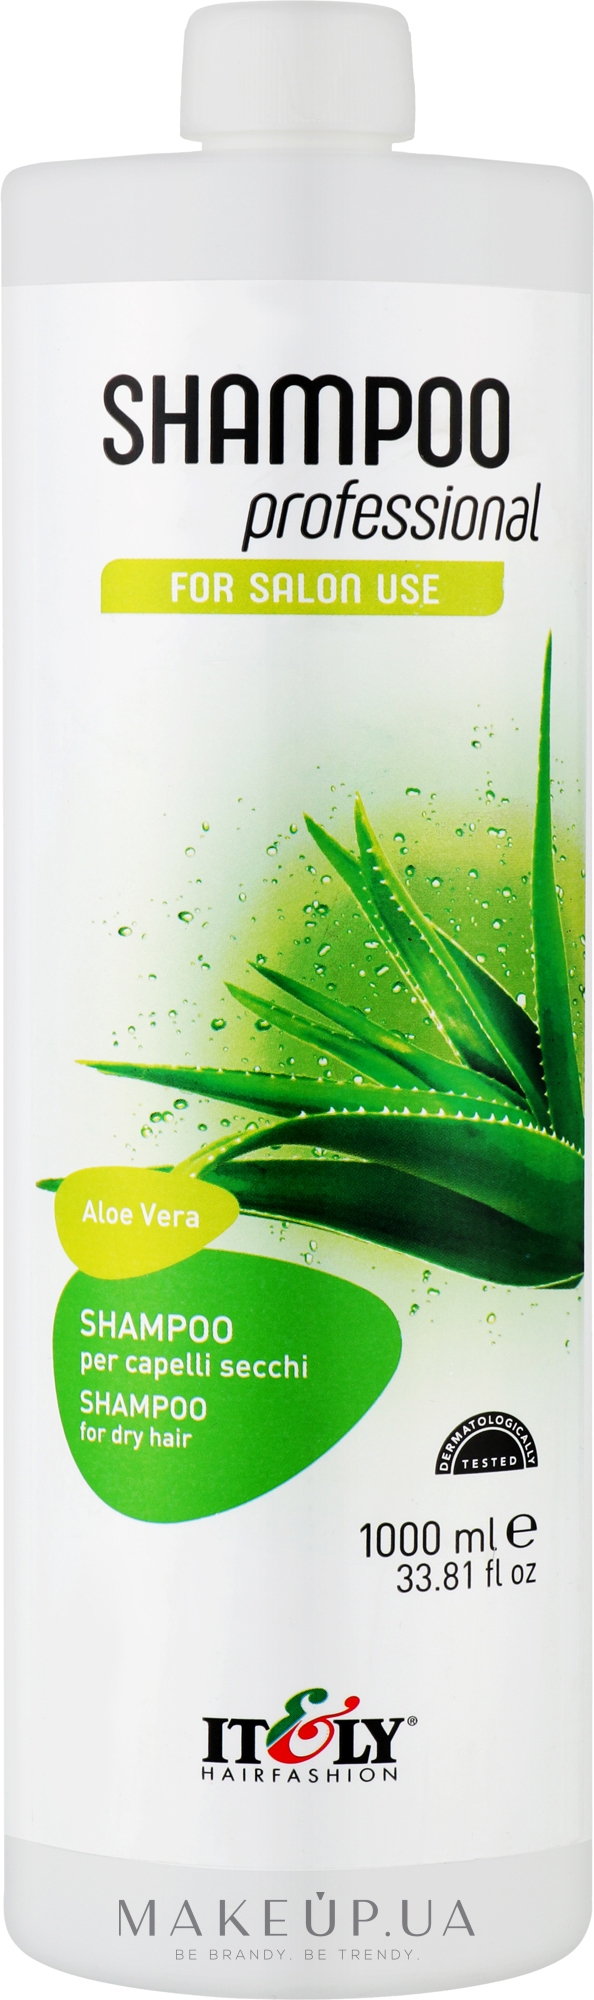 Увлажняющий шампунь для сухих волос - Itely Hairfashion Shampoo Professional Aloe Vera — фото 1000ml